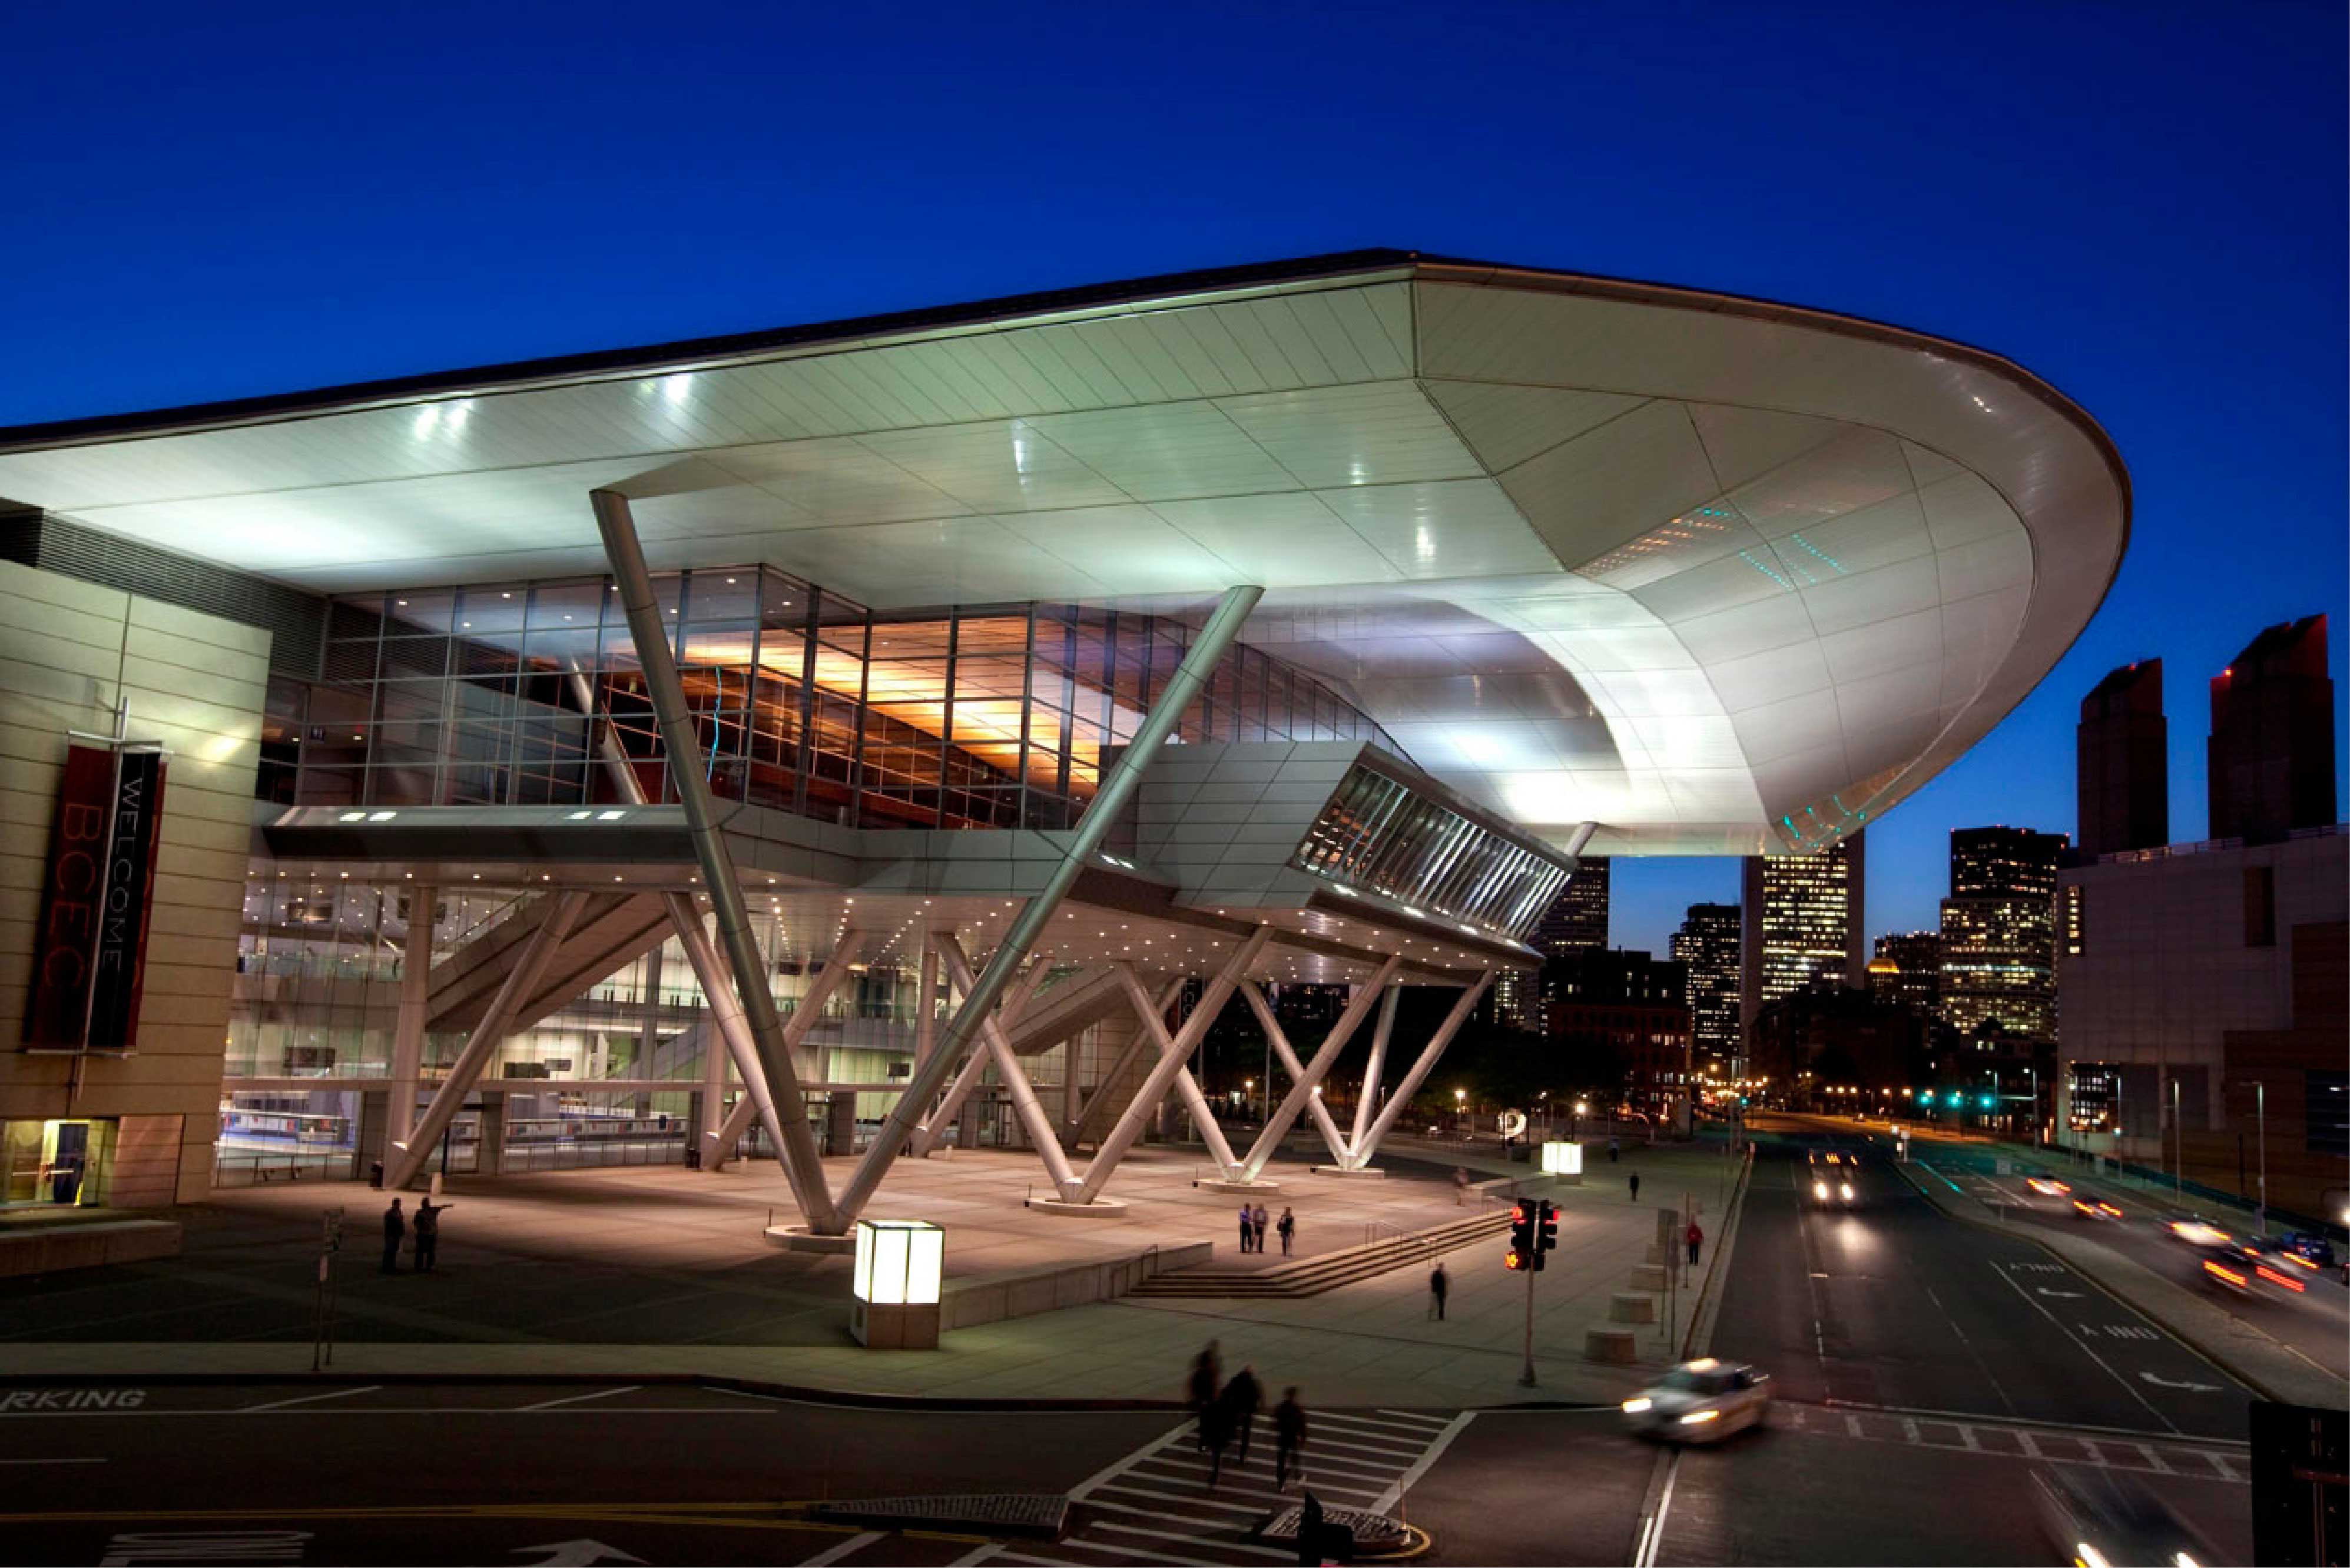 Boston convention & exhibition center (bcec)